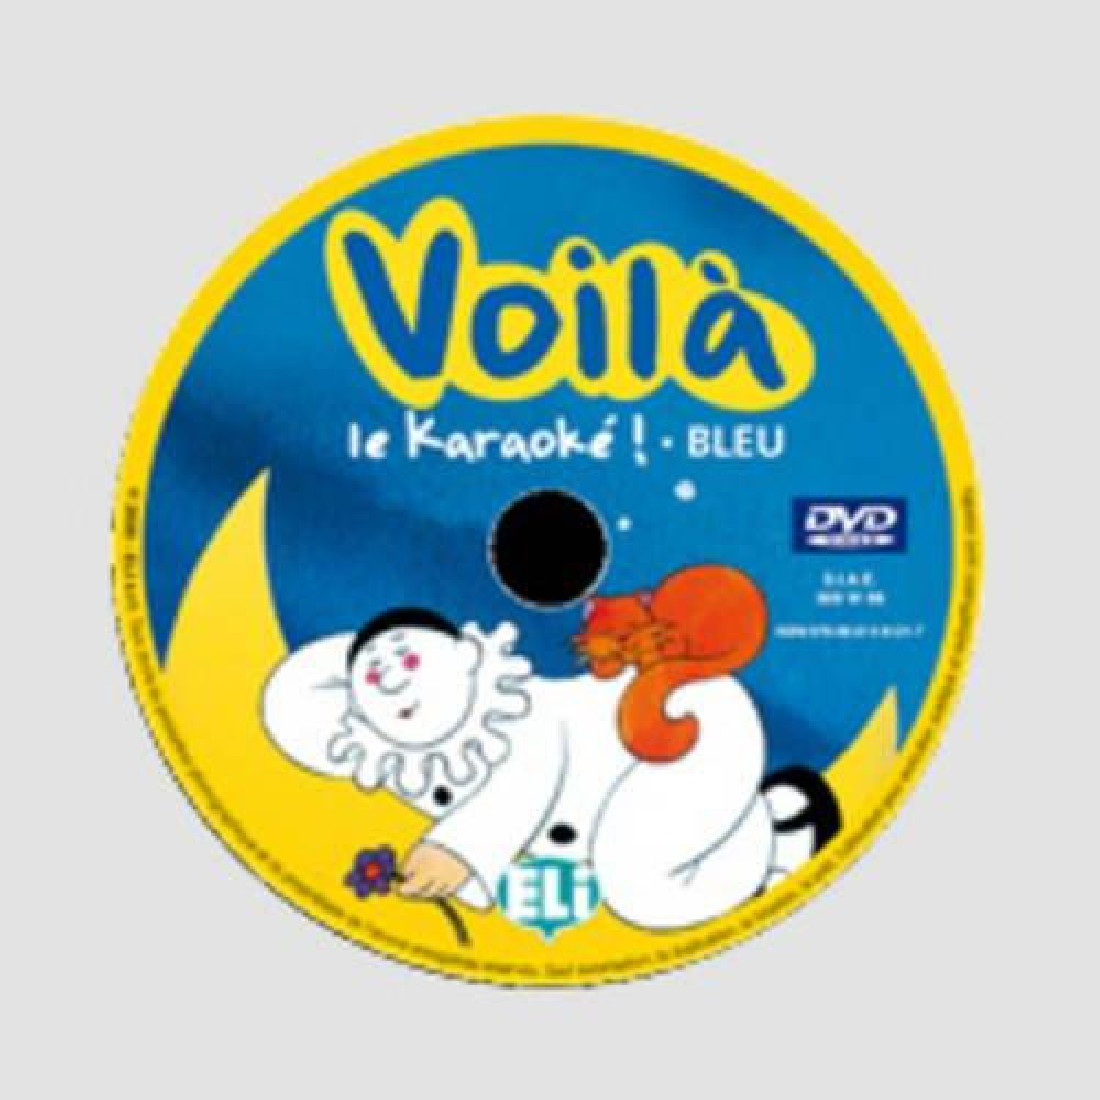 VOILA LE KARAOKE BLEUE - DVD